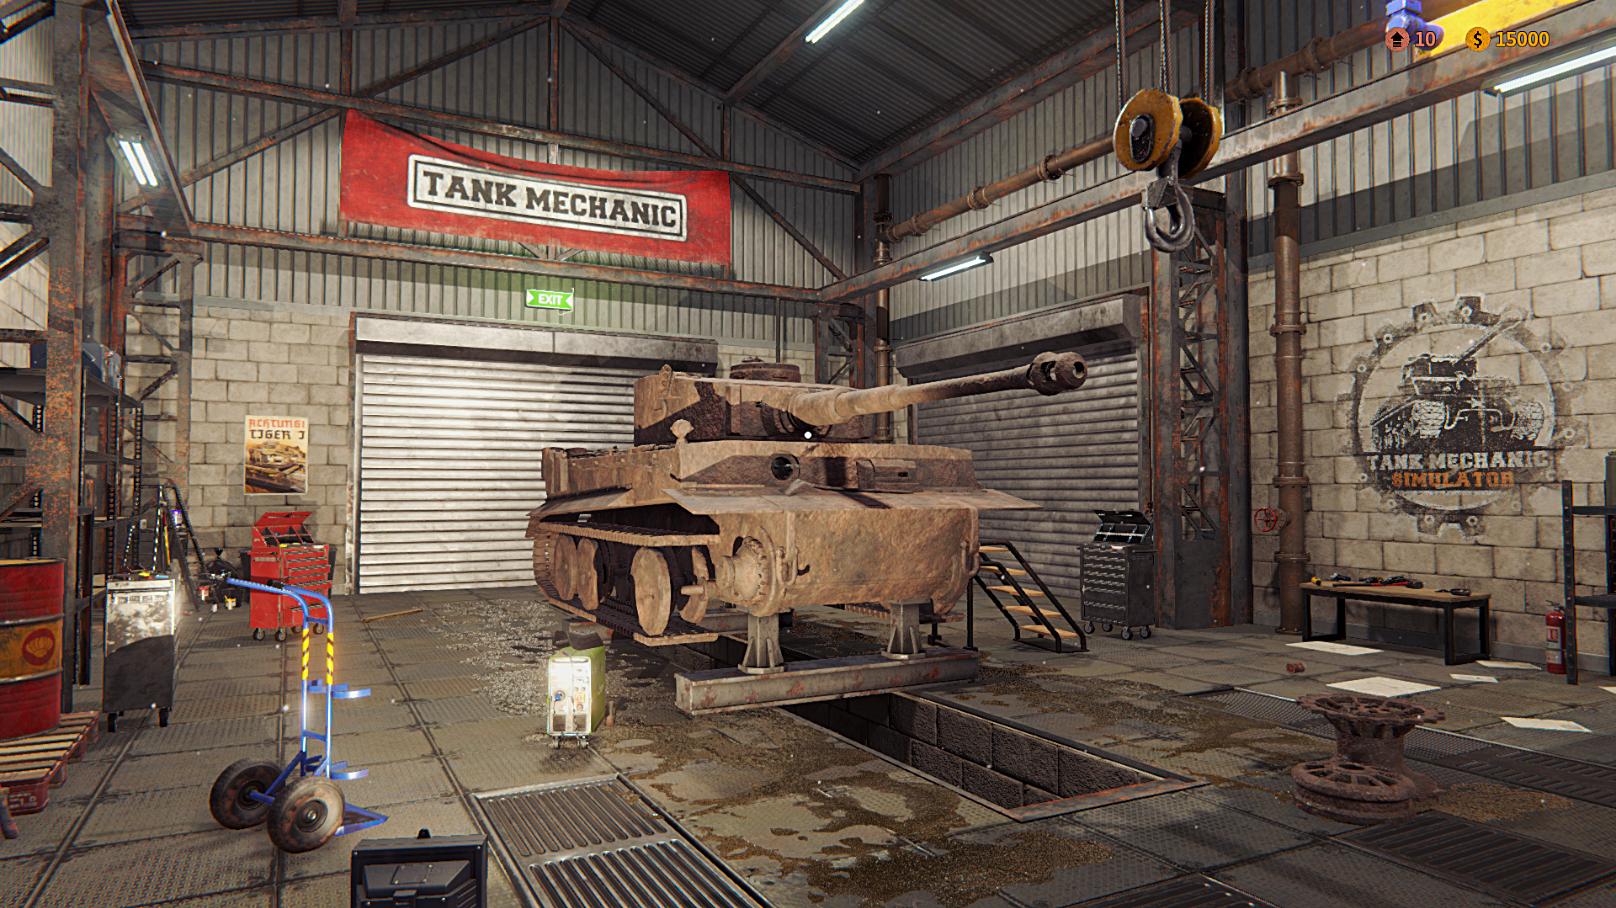 Screenshot №20 from game Tank Mechanic Simulator